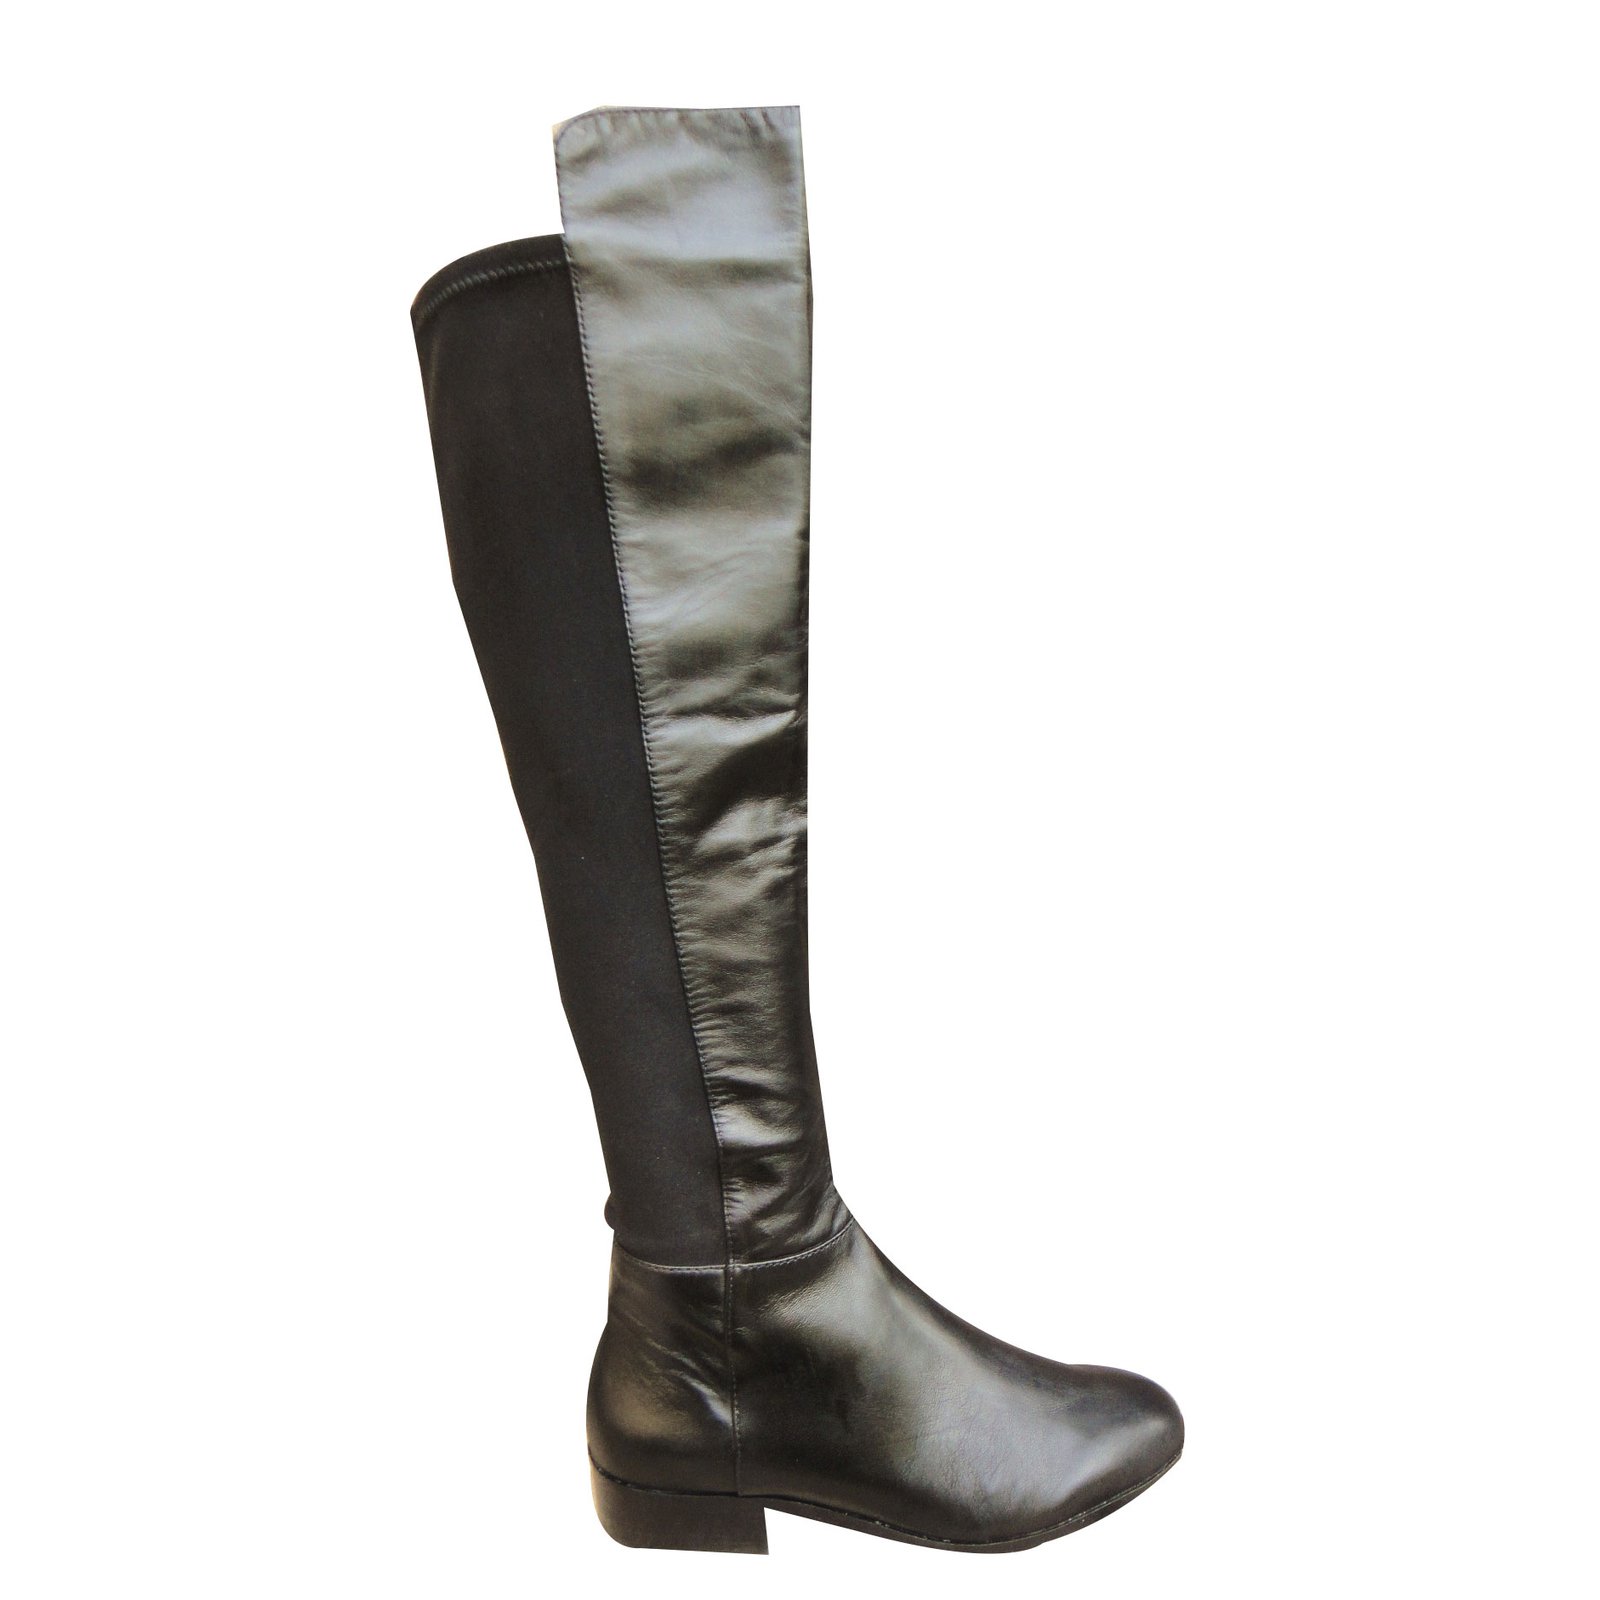 michael kors black leather boots